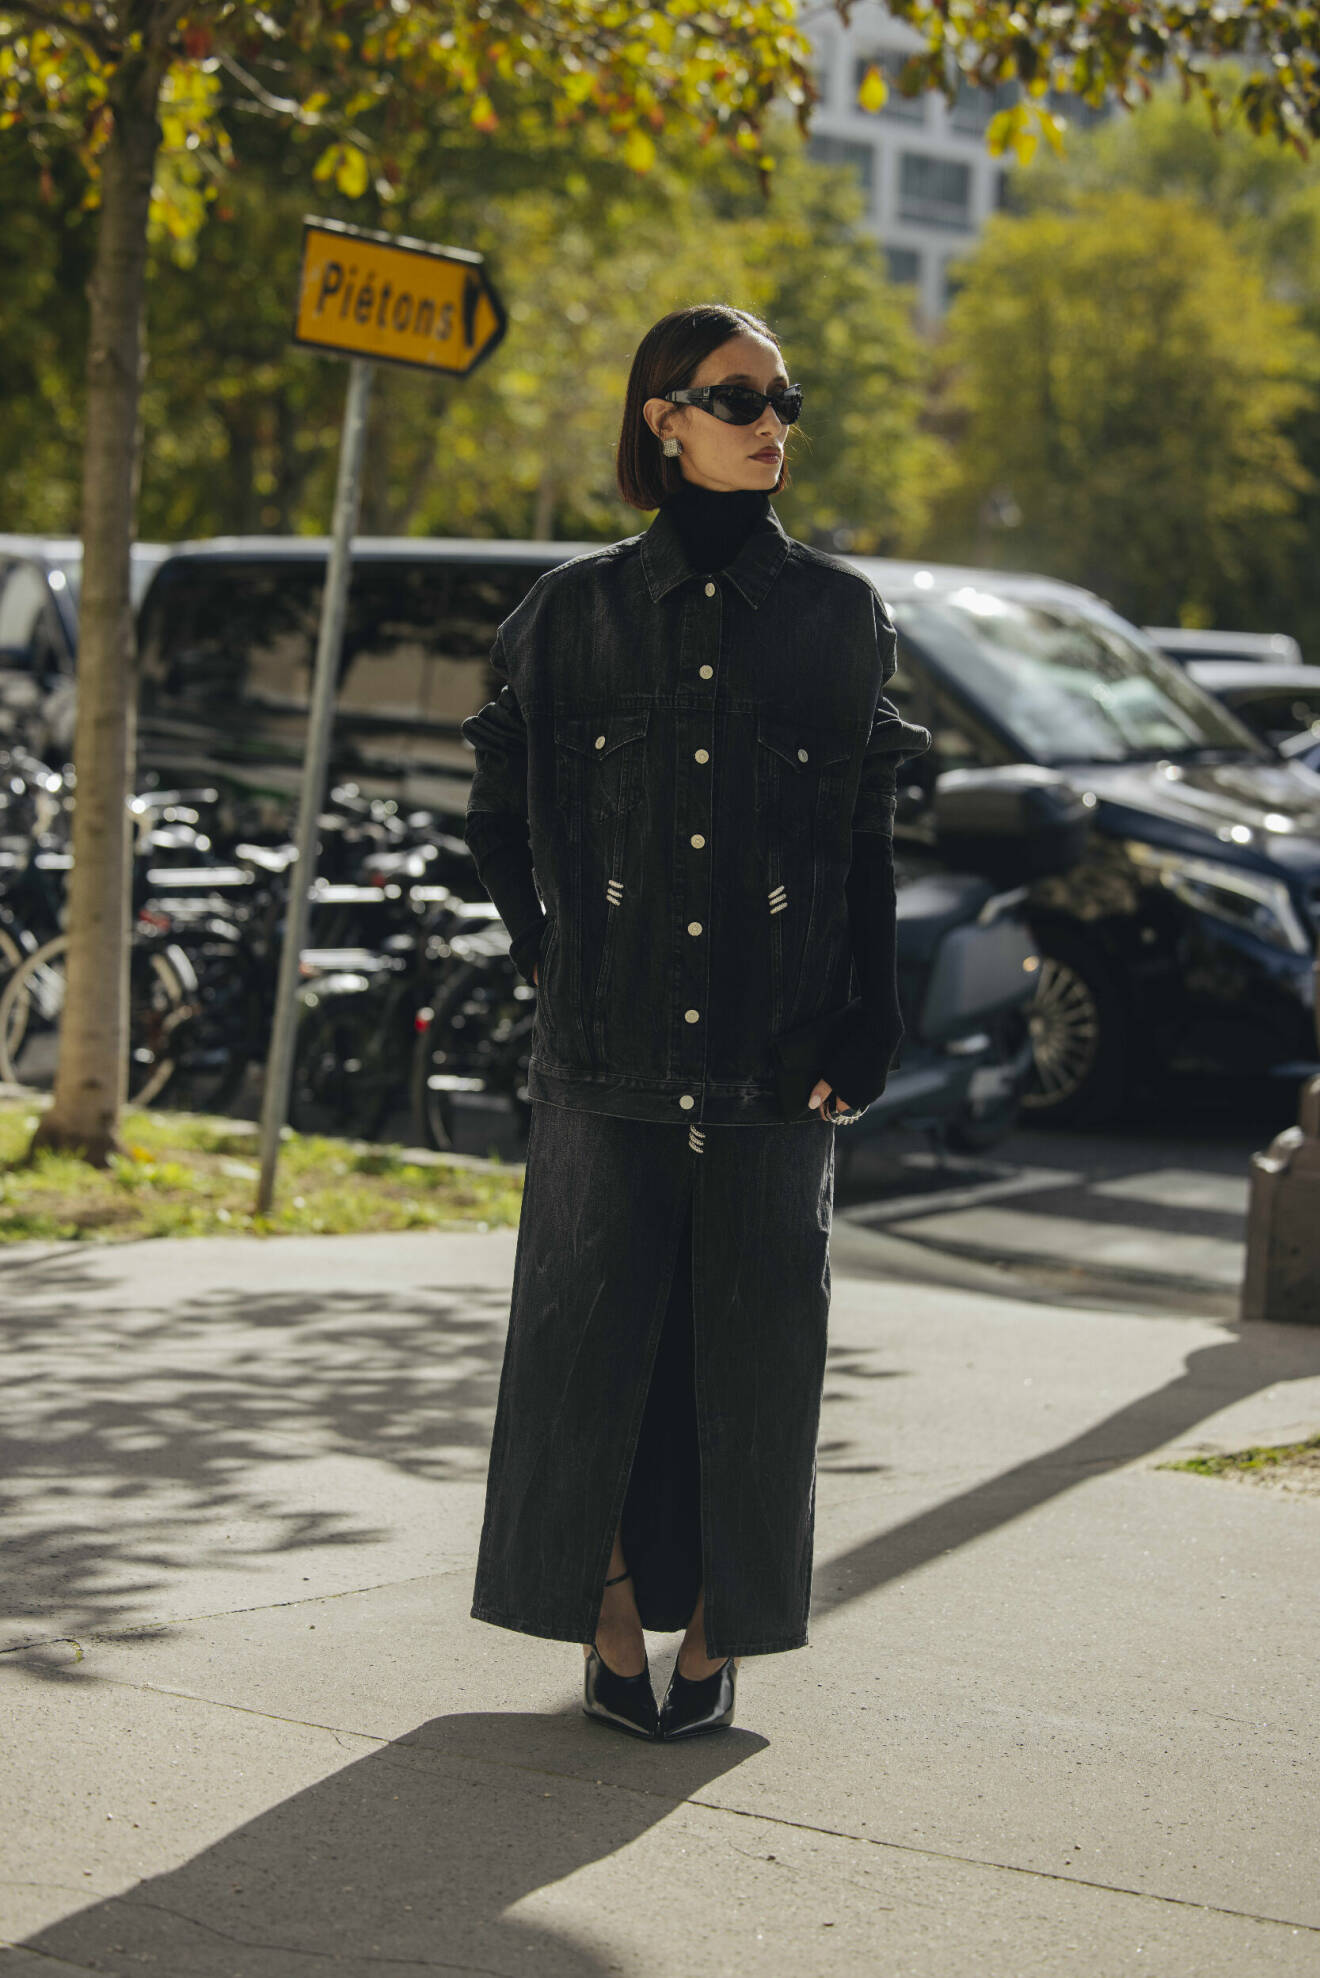 Streetstyleoutfit i double denim med en svart jeansjacka och matchande lång jeanskjol.